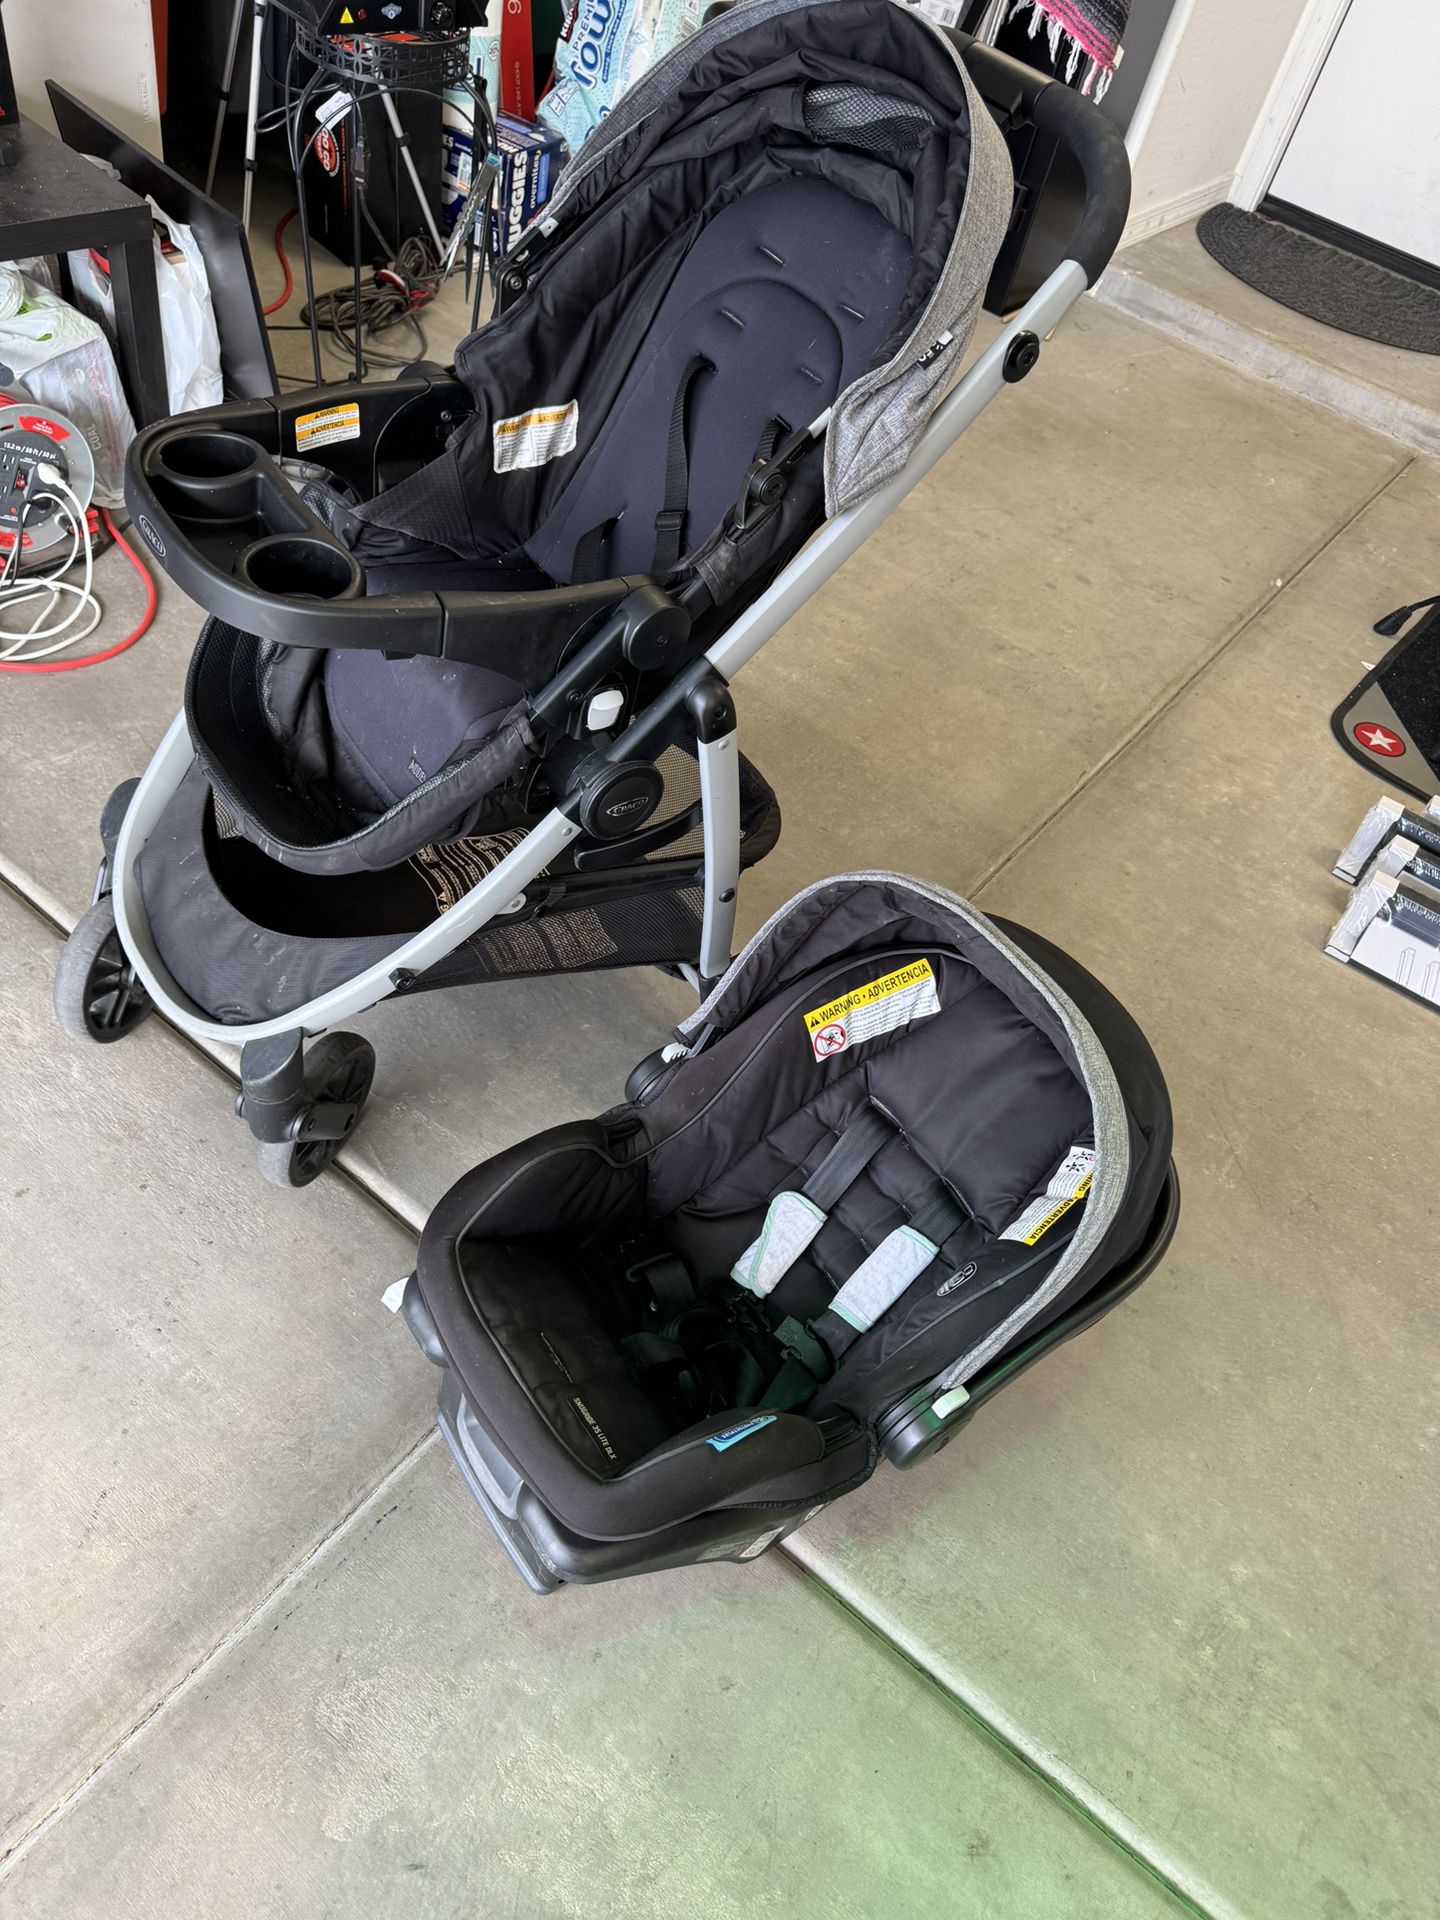 Graco Car seat stroller Set 